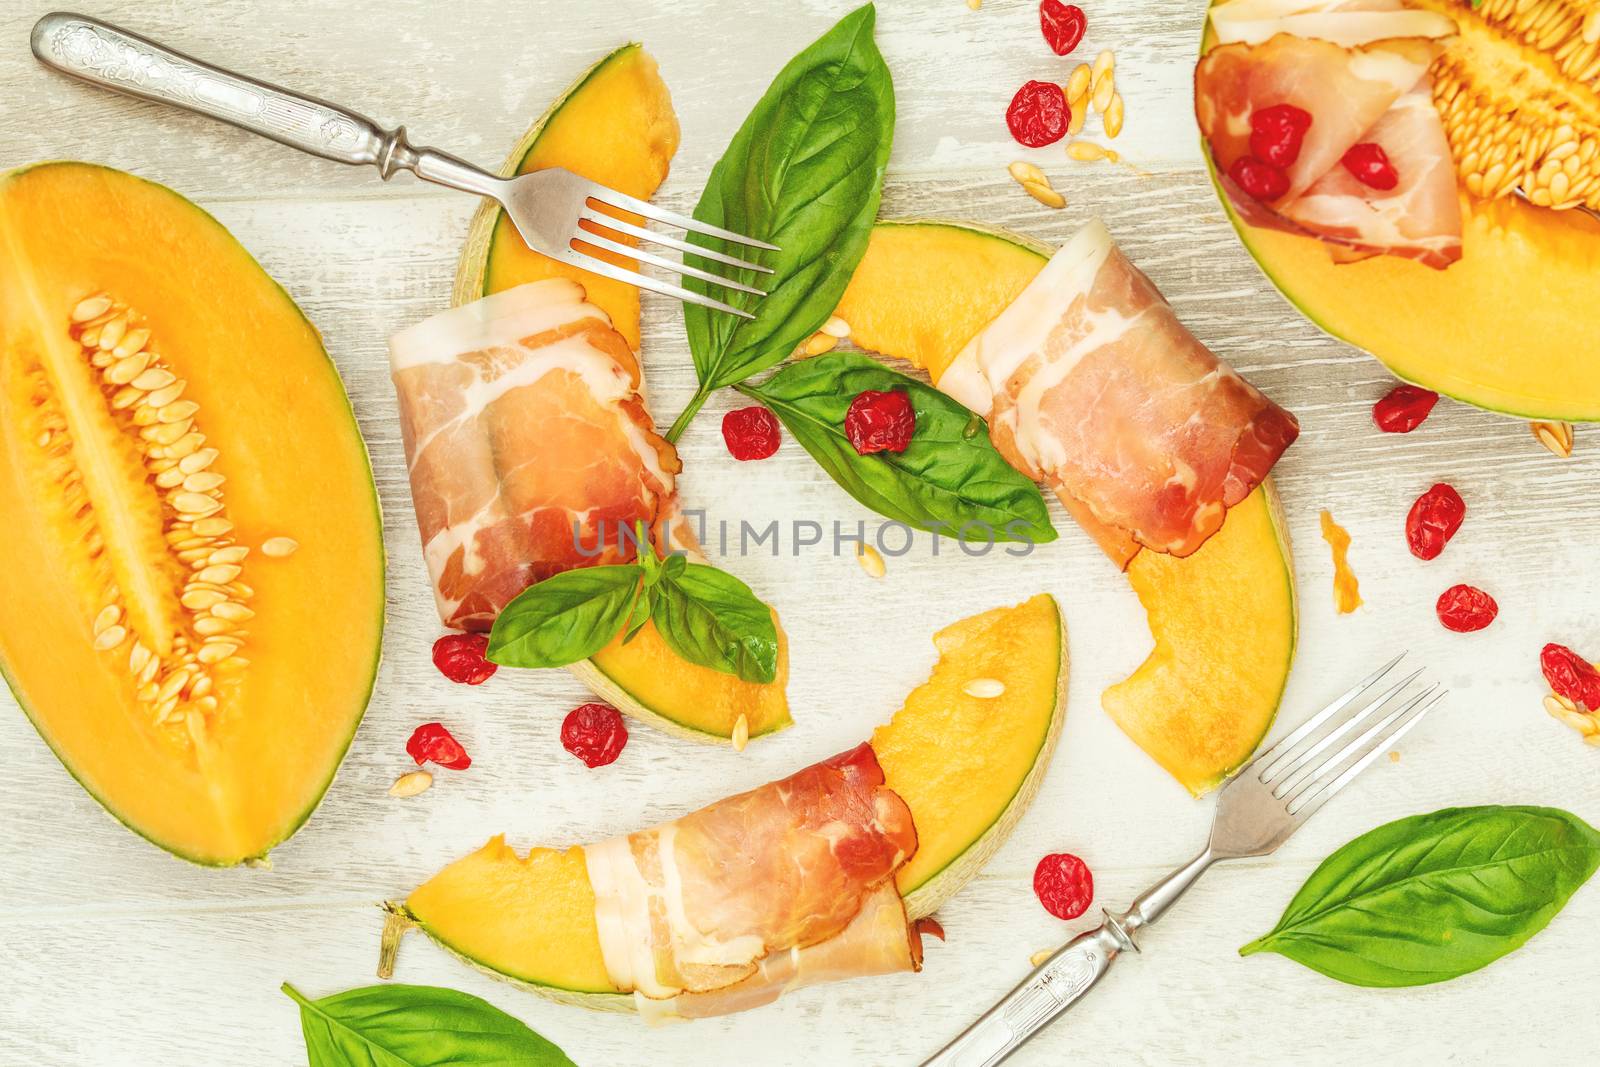 Cantaloupe melon sliced with Prosciutto. Italian appetizer by ArtSvitlyna